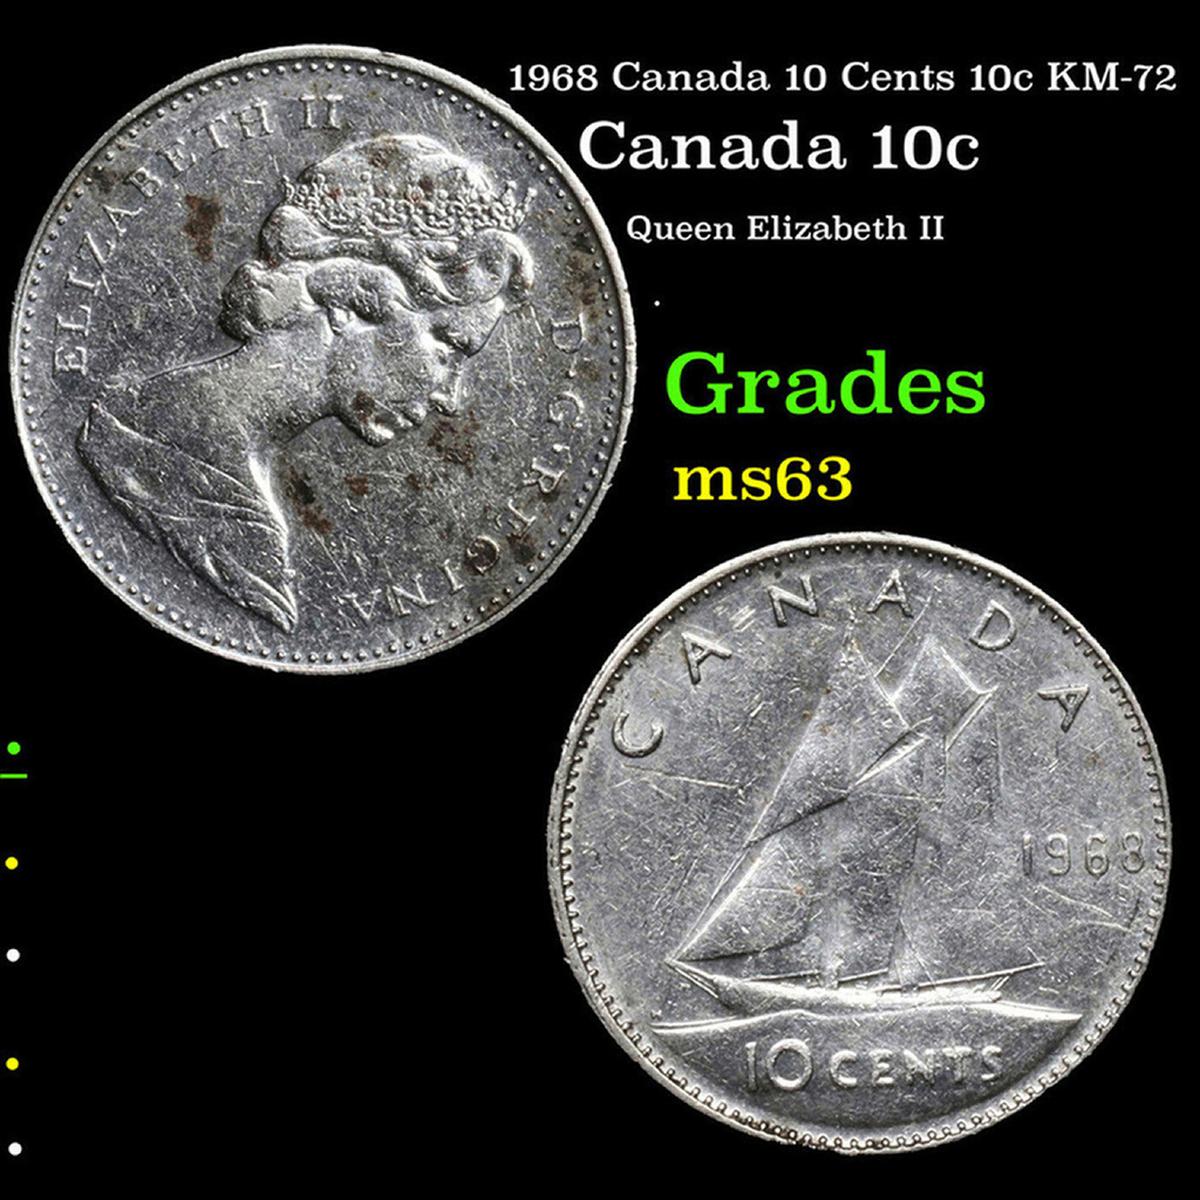 1968 Canada 10 Cents 10c KM-72 Grades Select Unc